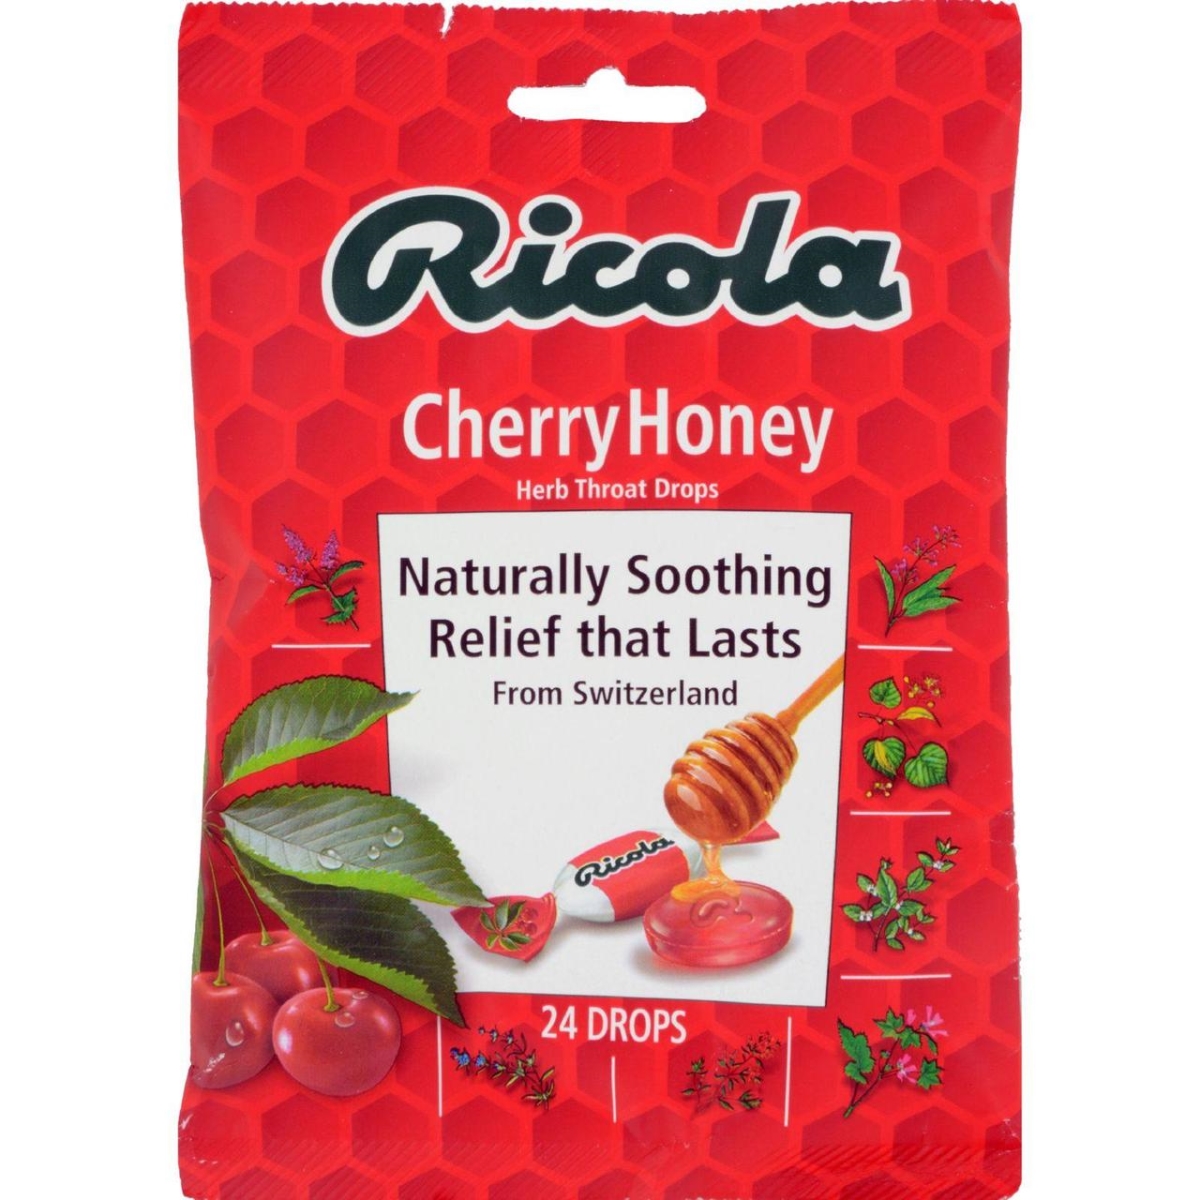 Hg0161638 Herb Throat Drops Cherry Honey - 24 Drops, Case Of 12